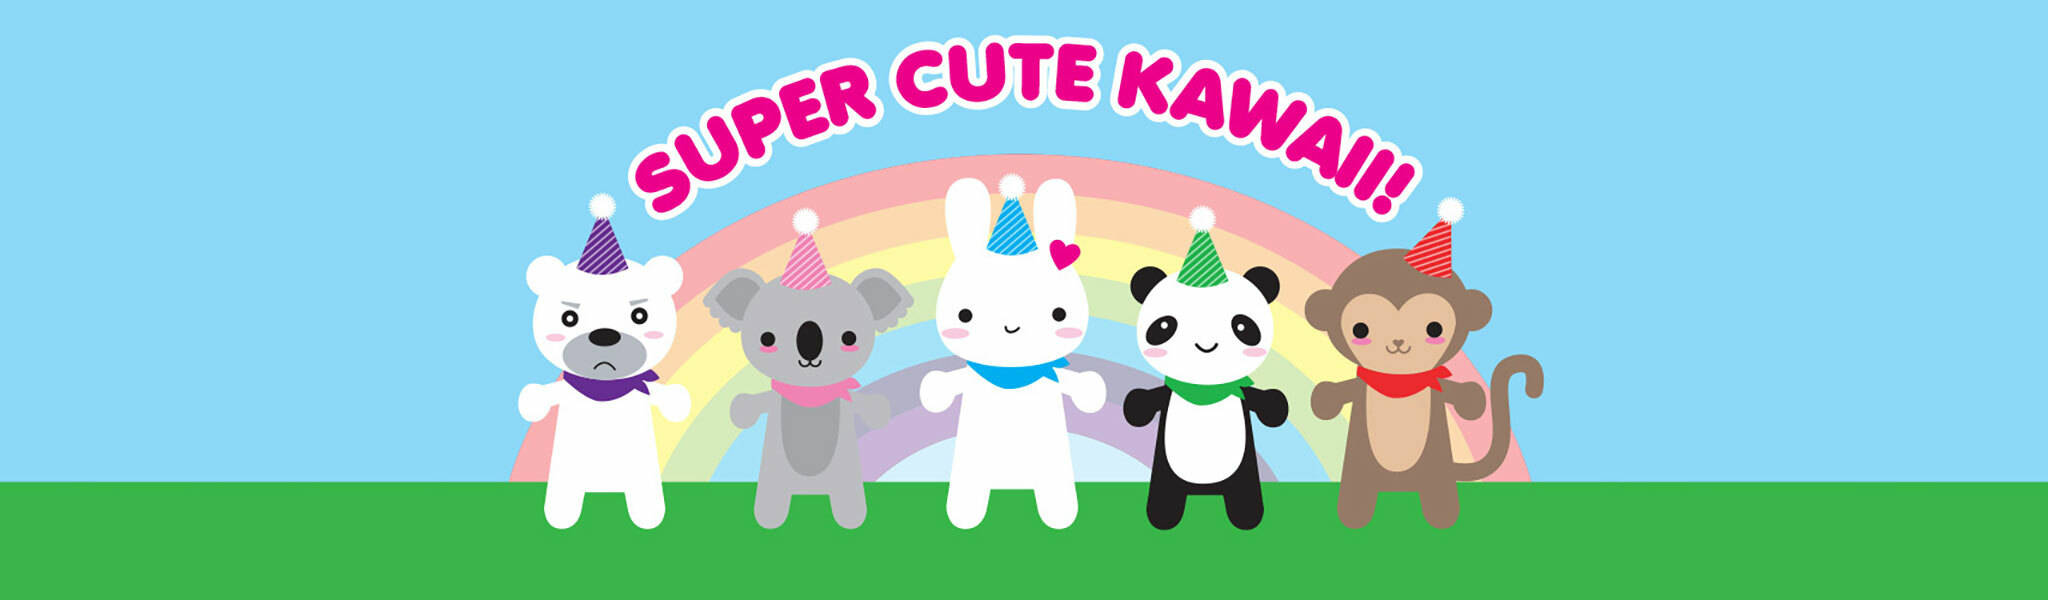 Super Cute Kawaii Characters With Rainbow Wallpaper